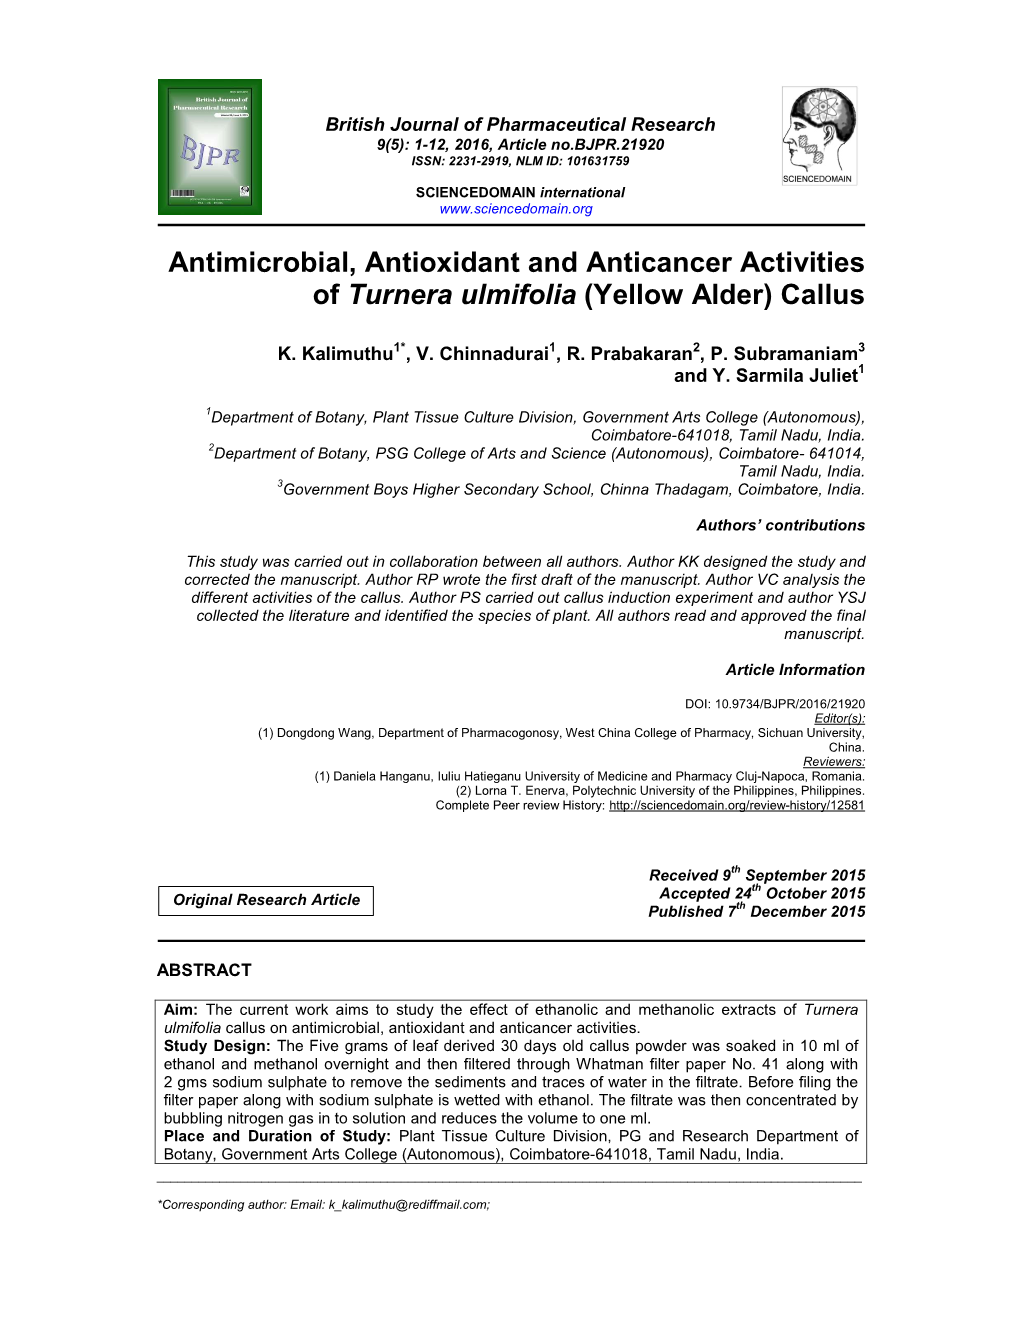 Antimicrobial, Antioxidant and Anticancer Activities of Turnera Ulmifolia (Yellow Alder) Callus